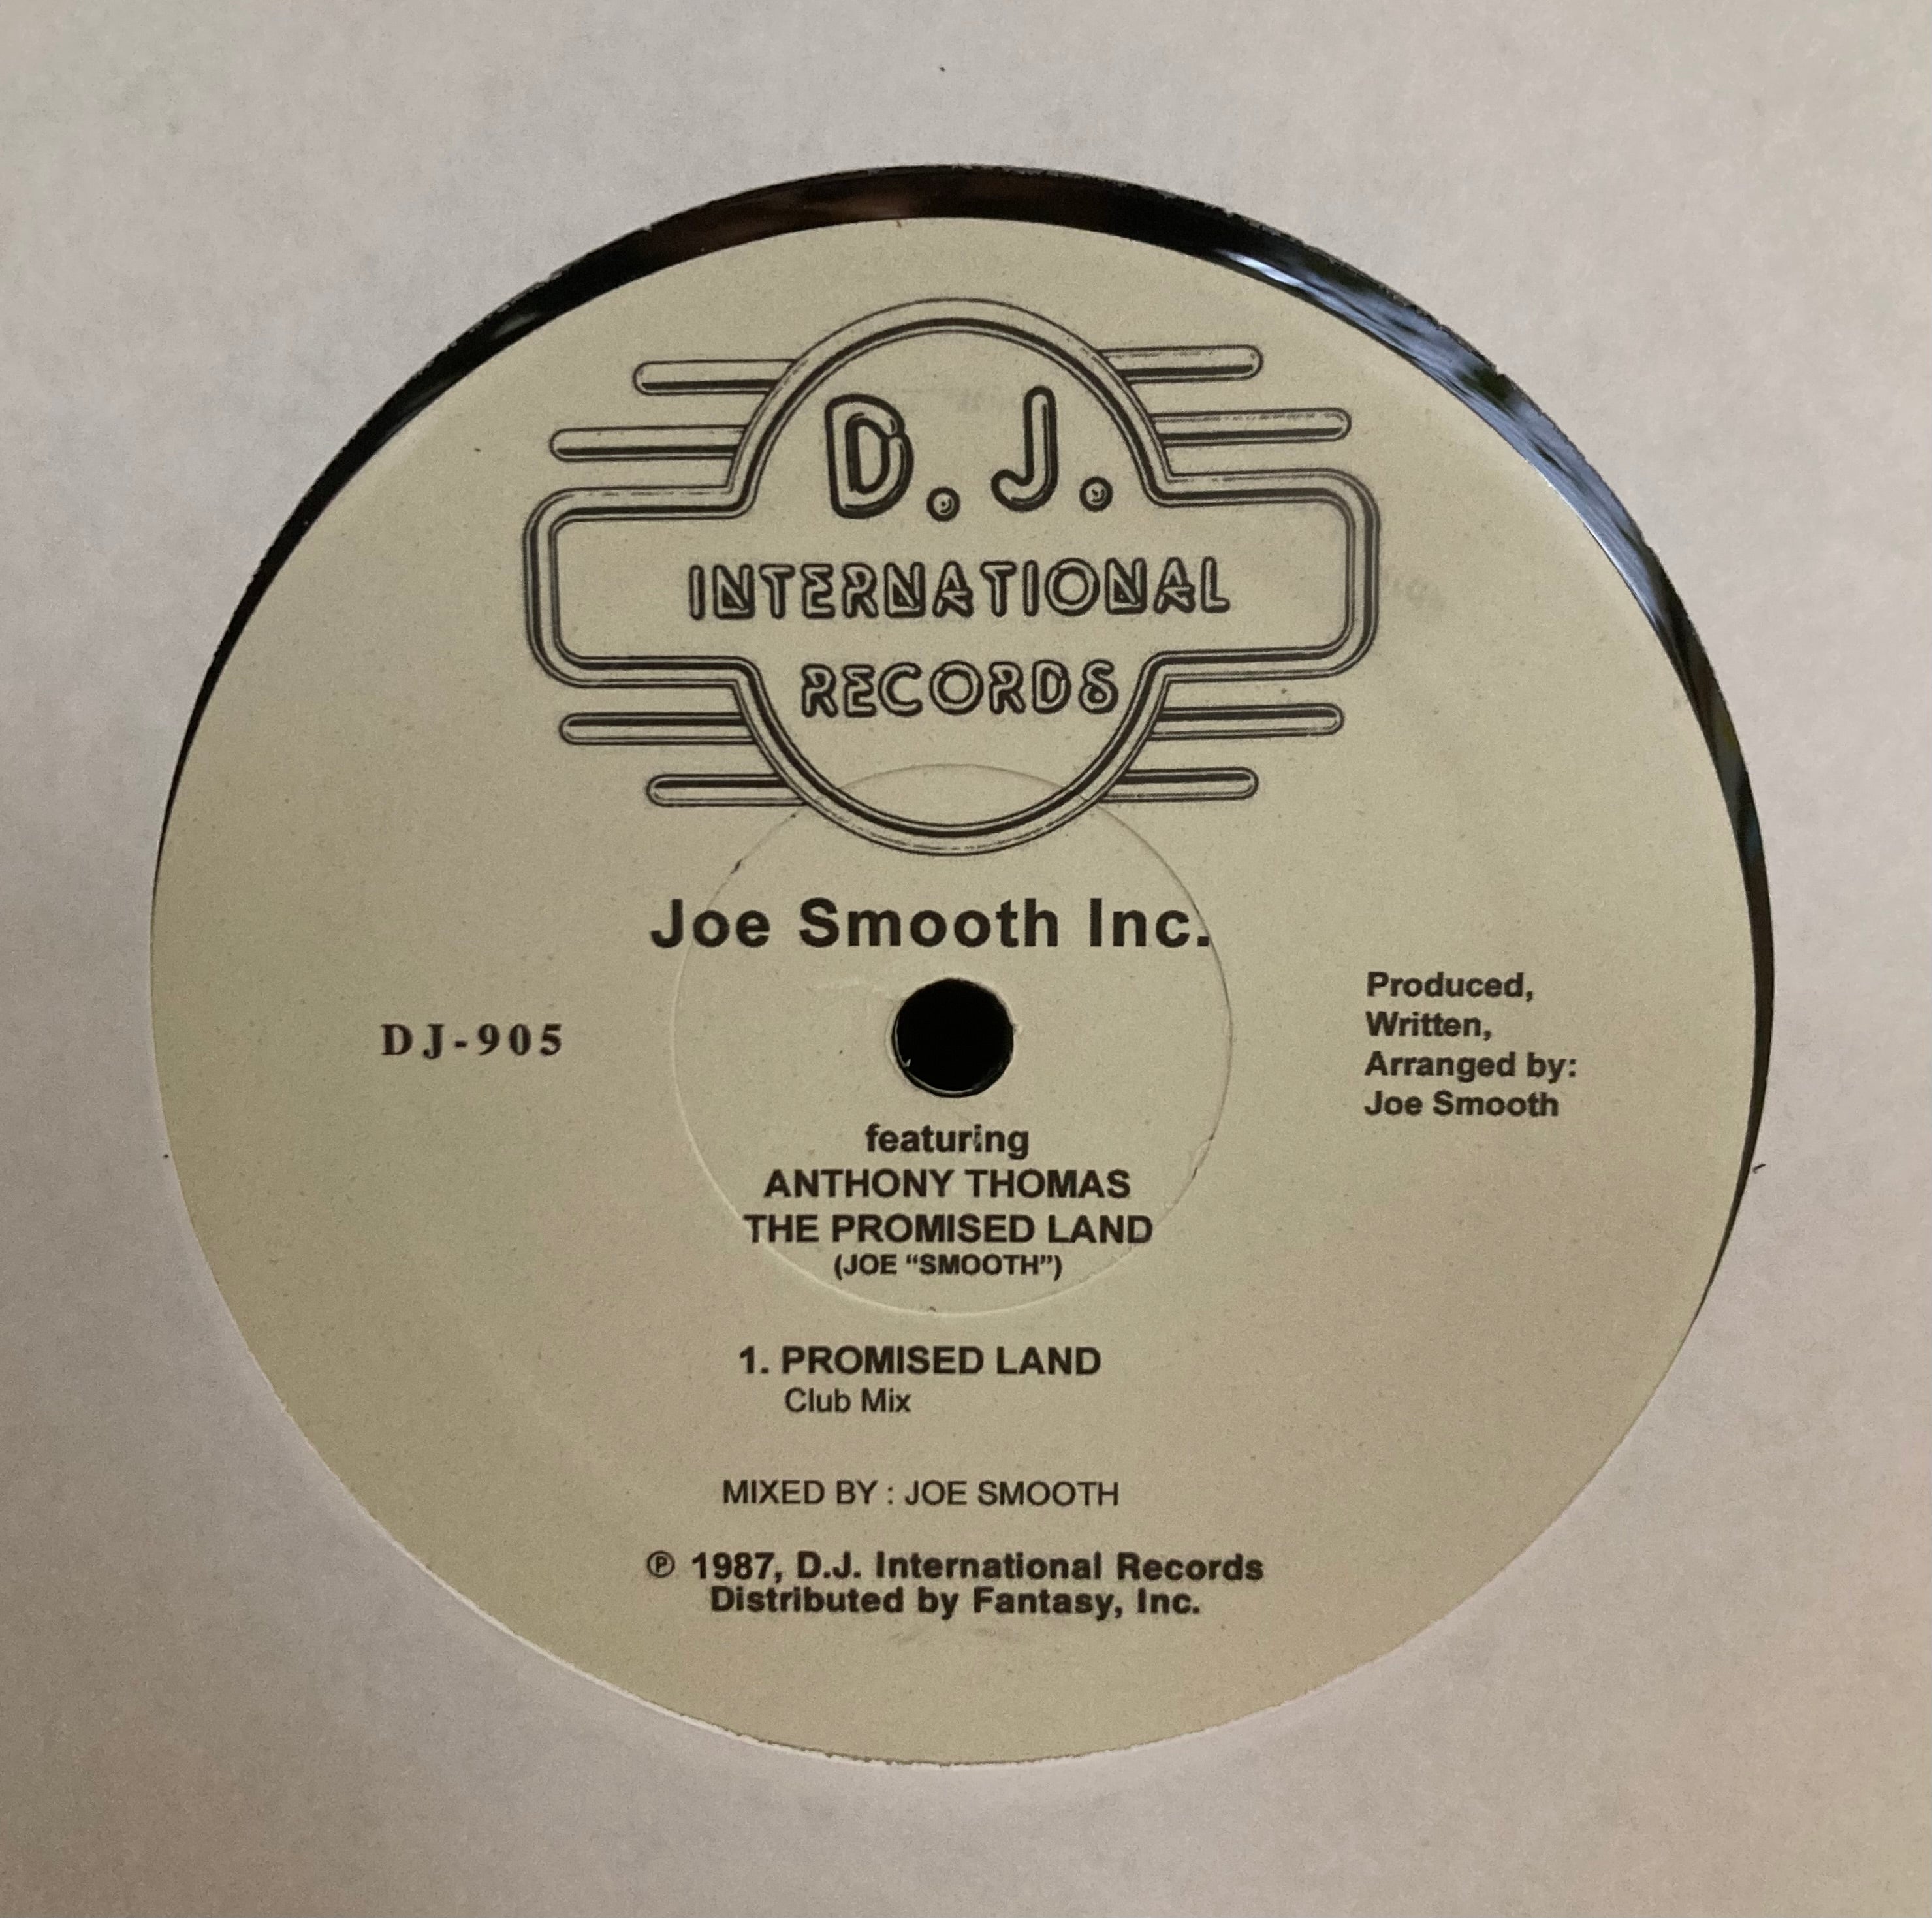 Joe Smooth Inc. Featuring Anthony Thomas – The Promised Land